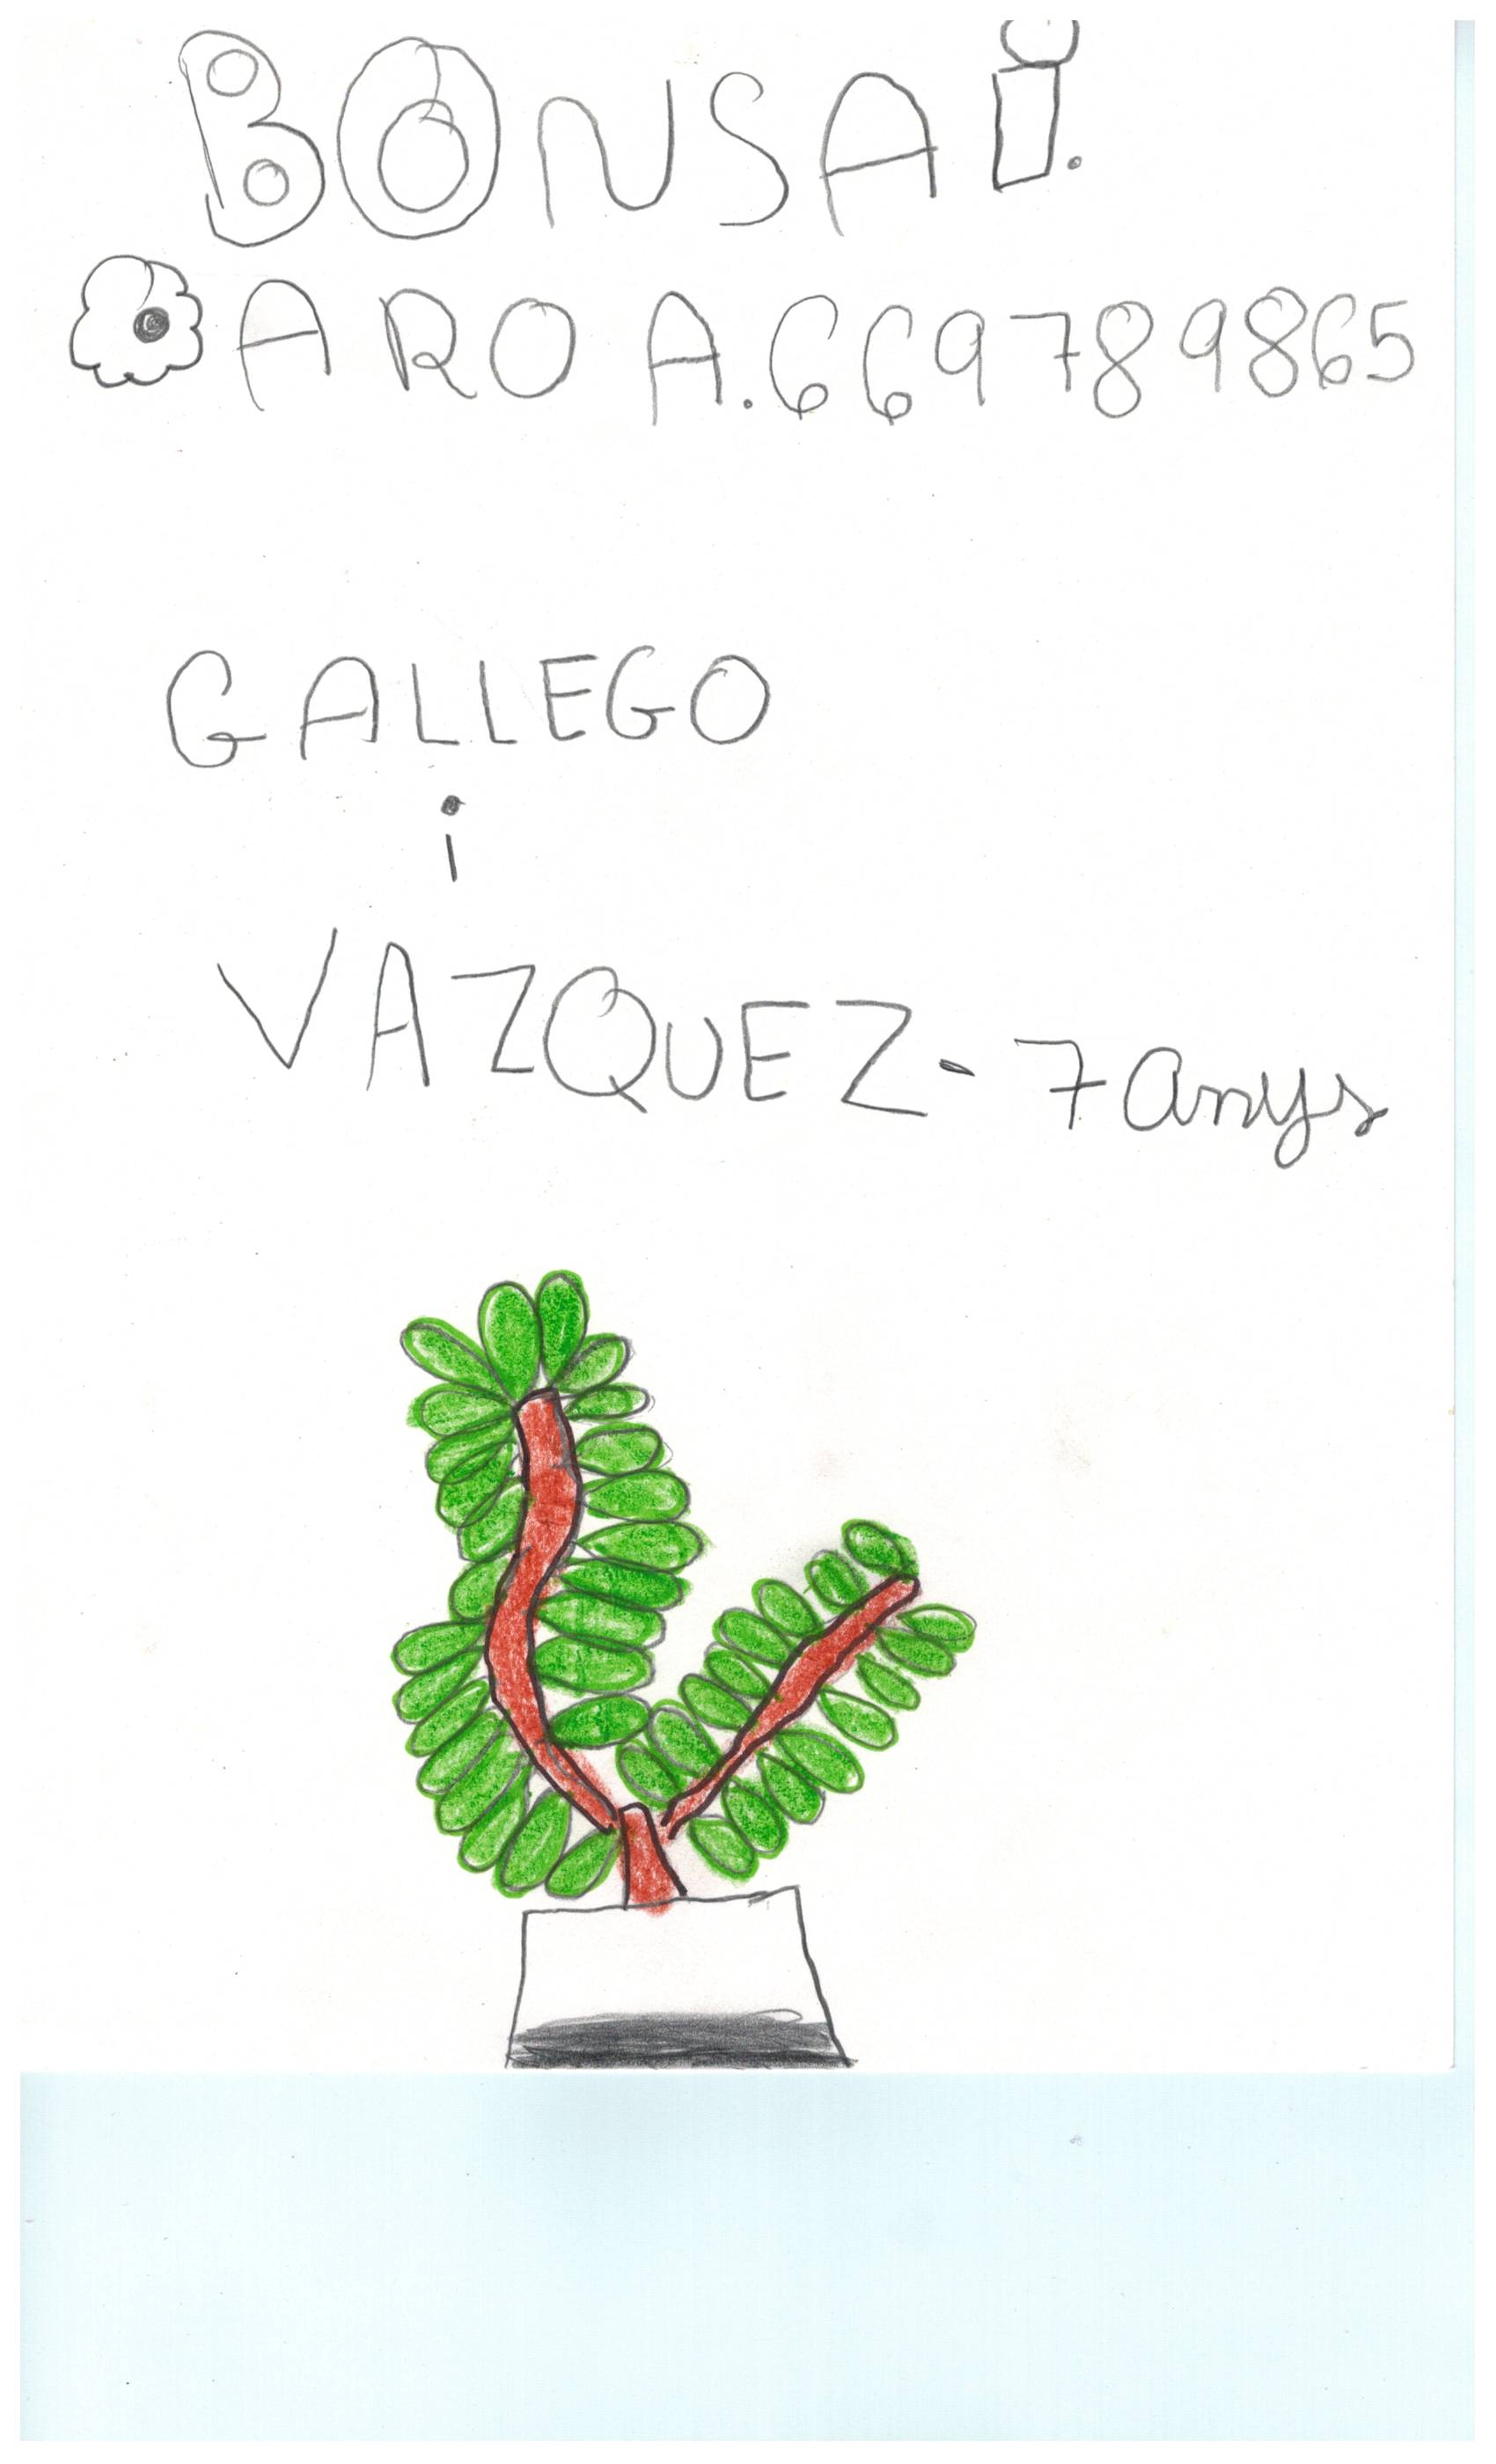 Aroa Gallego. 7 anys.